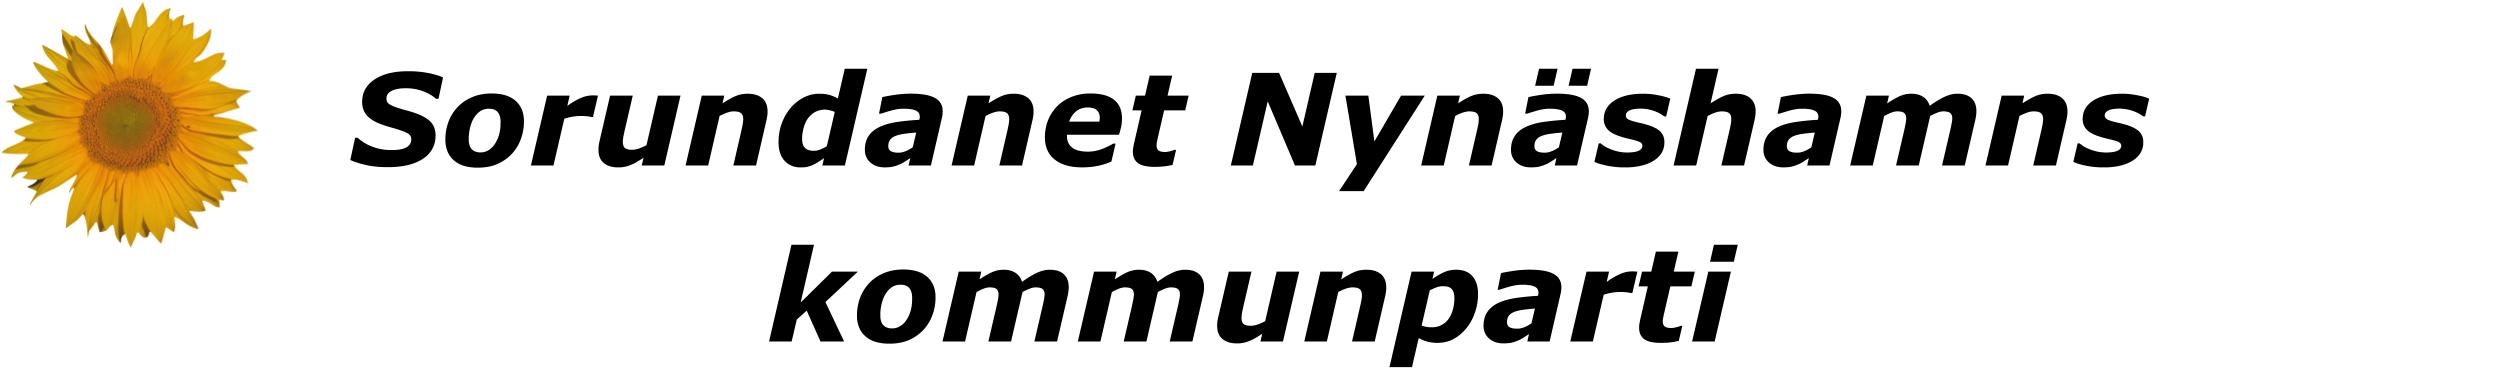 Sorundanet Nynäshamns kommunpartis banner!